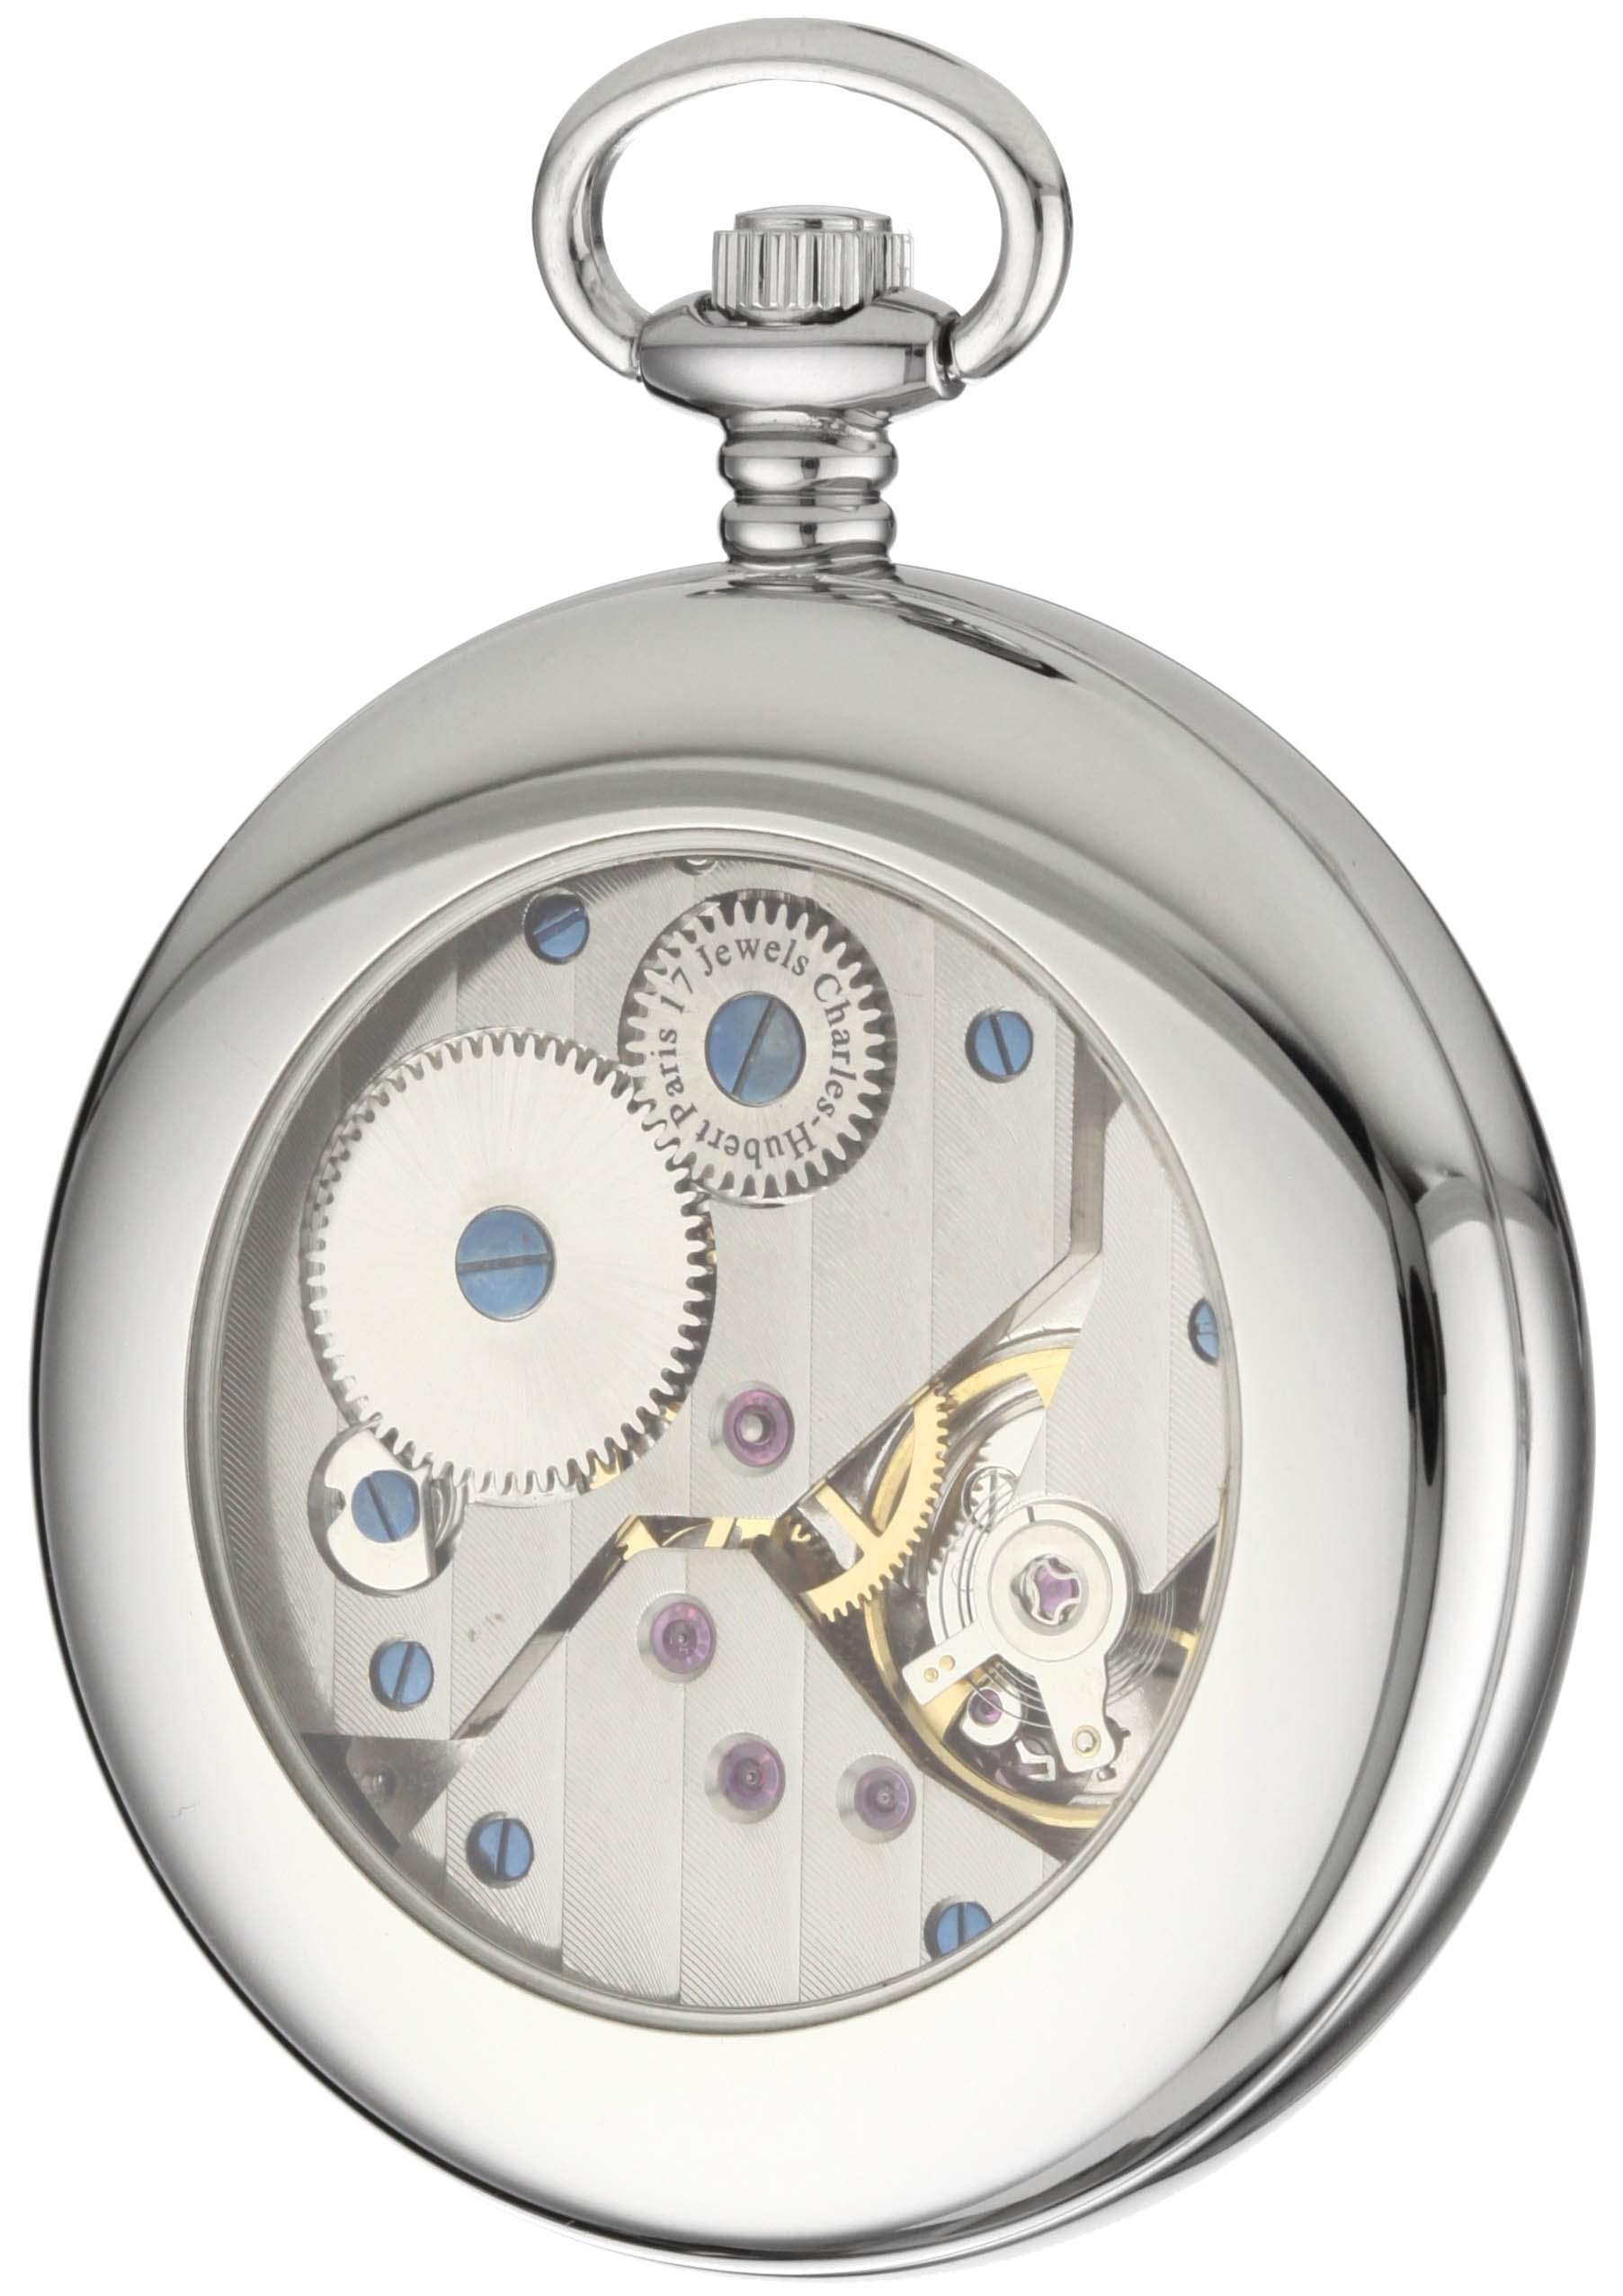 Charles-Hubert, Paris 3912-W Premium Collection Stainless Steel Pocket Watch